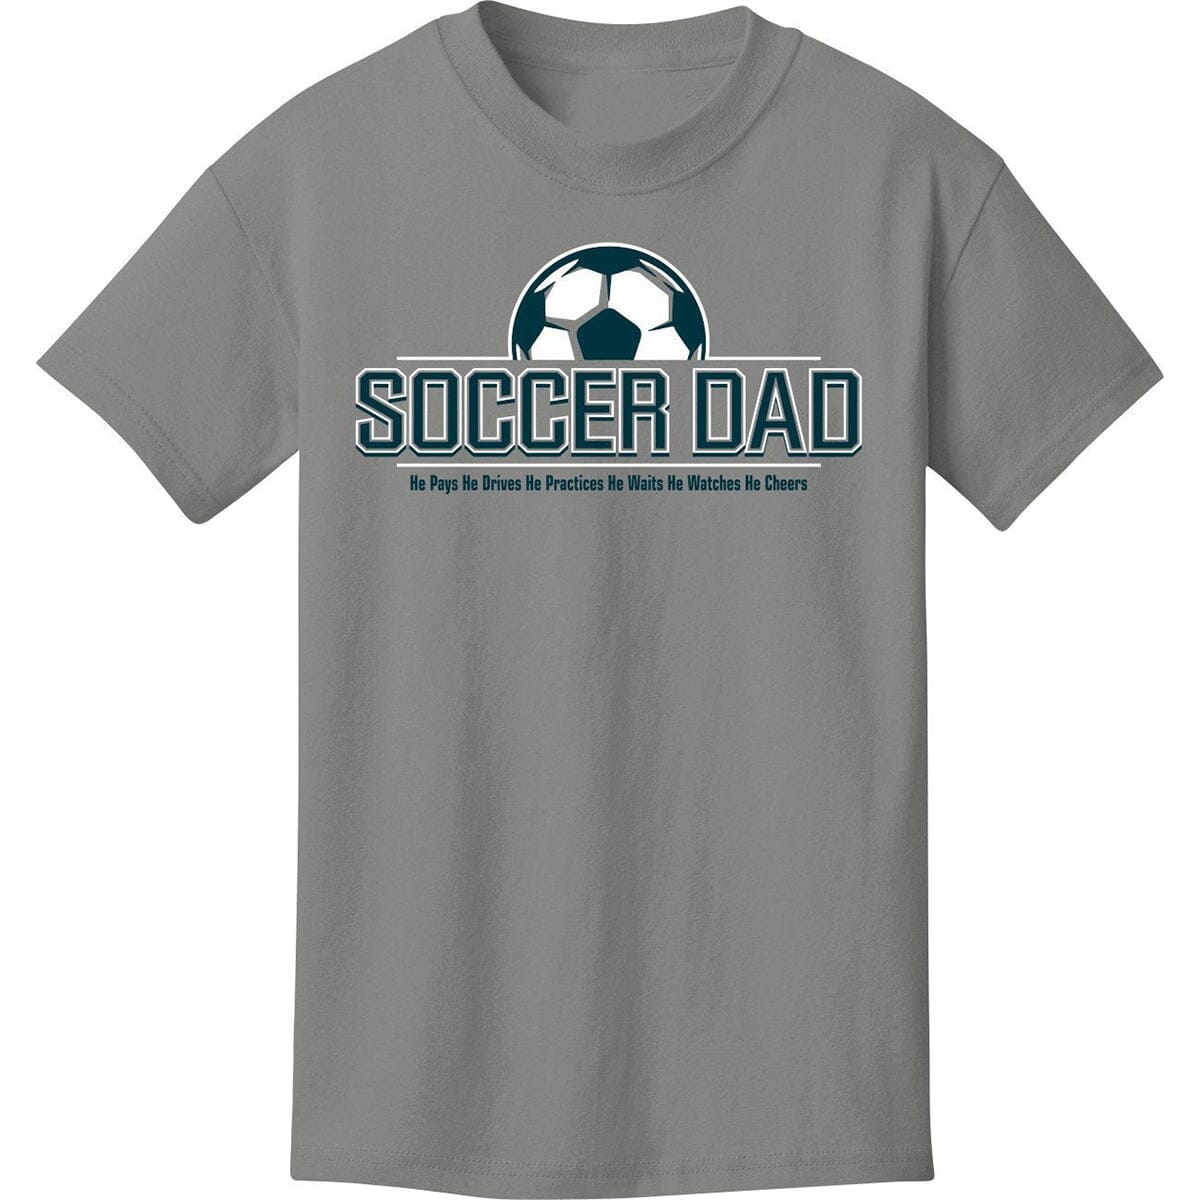 Soccer Dad Soccer T-Shirt Humorous Shirt 411 Youth Small Grey 